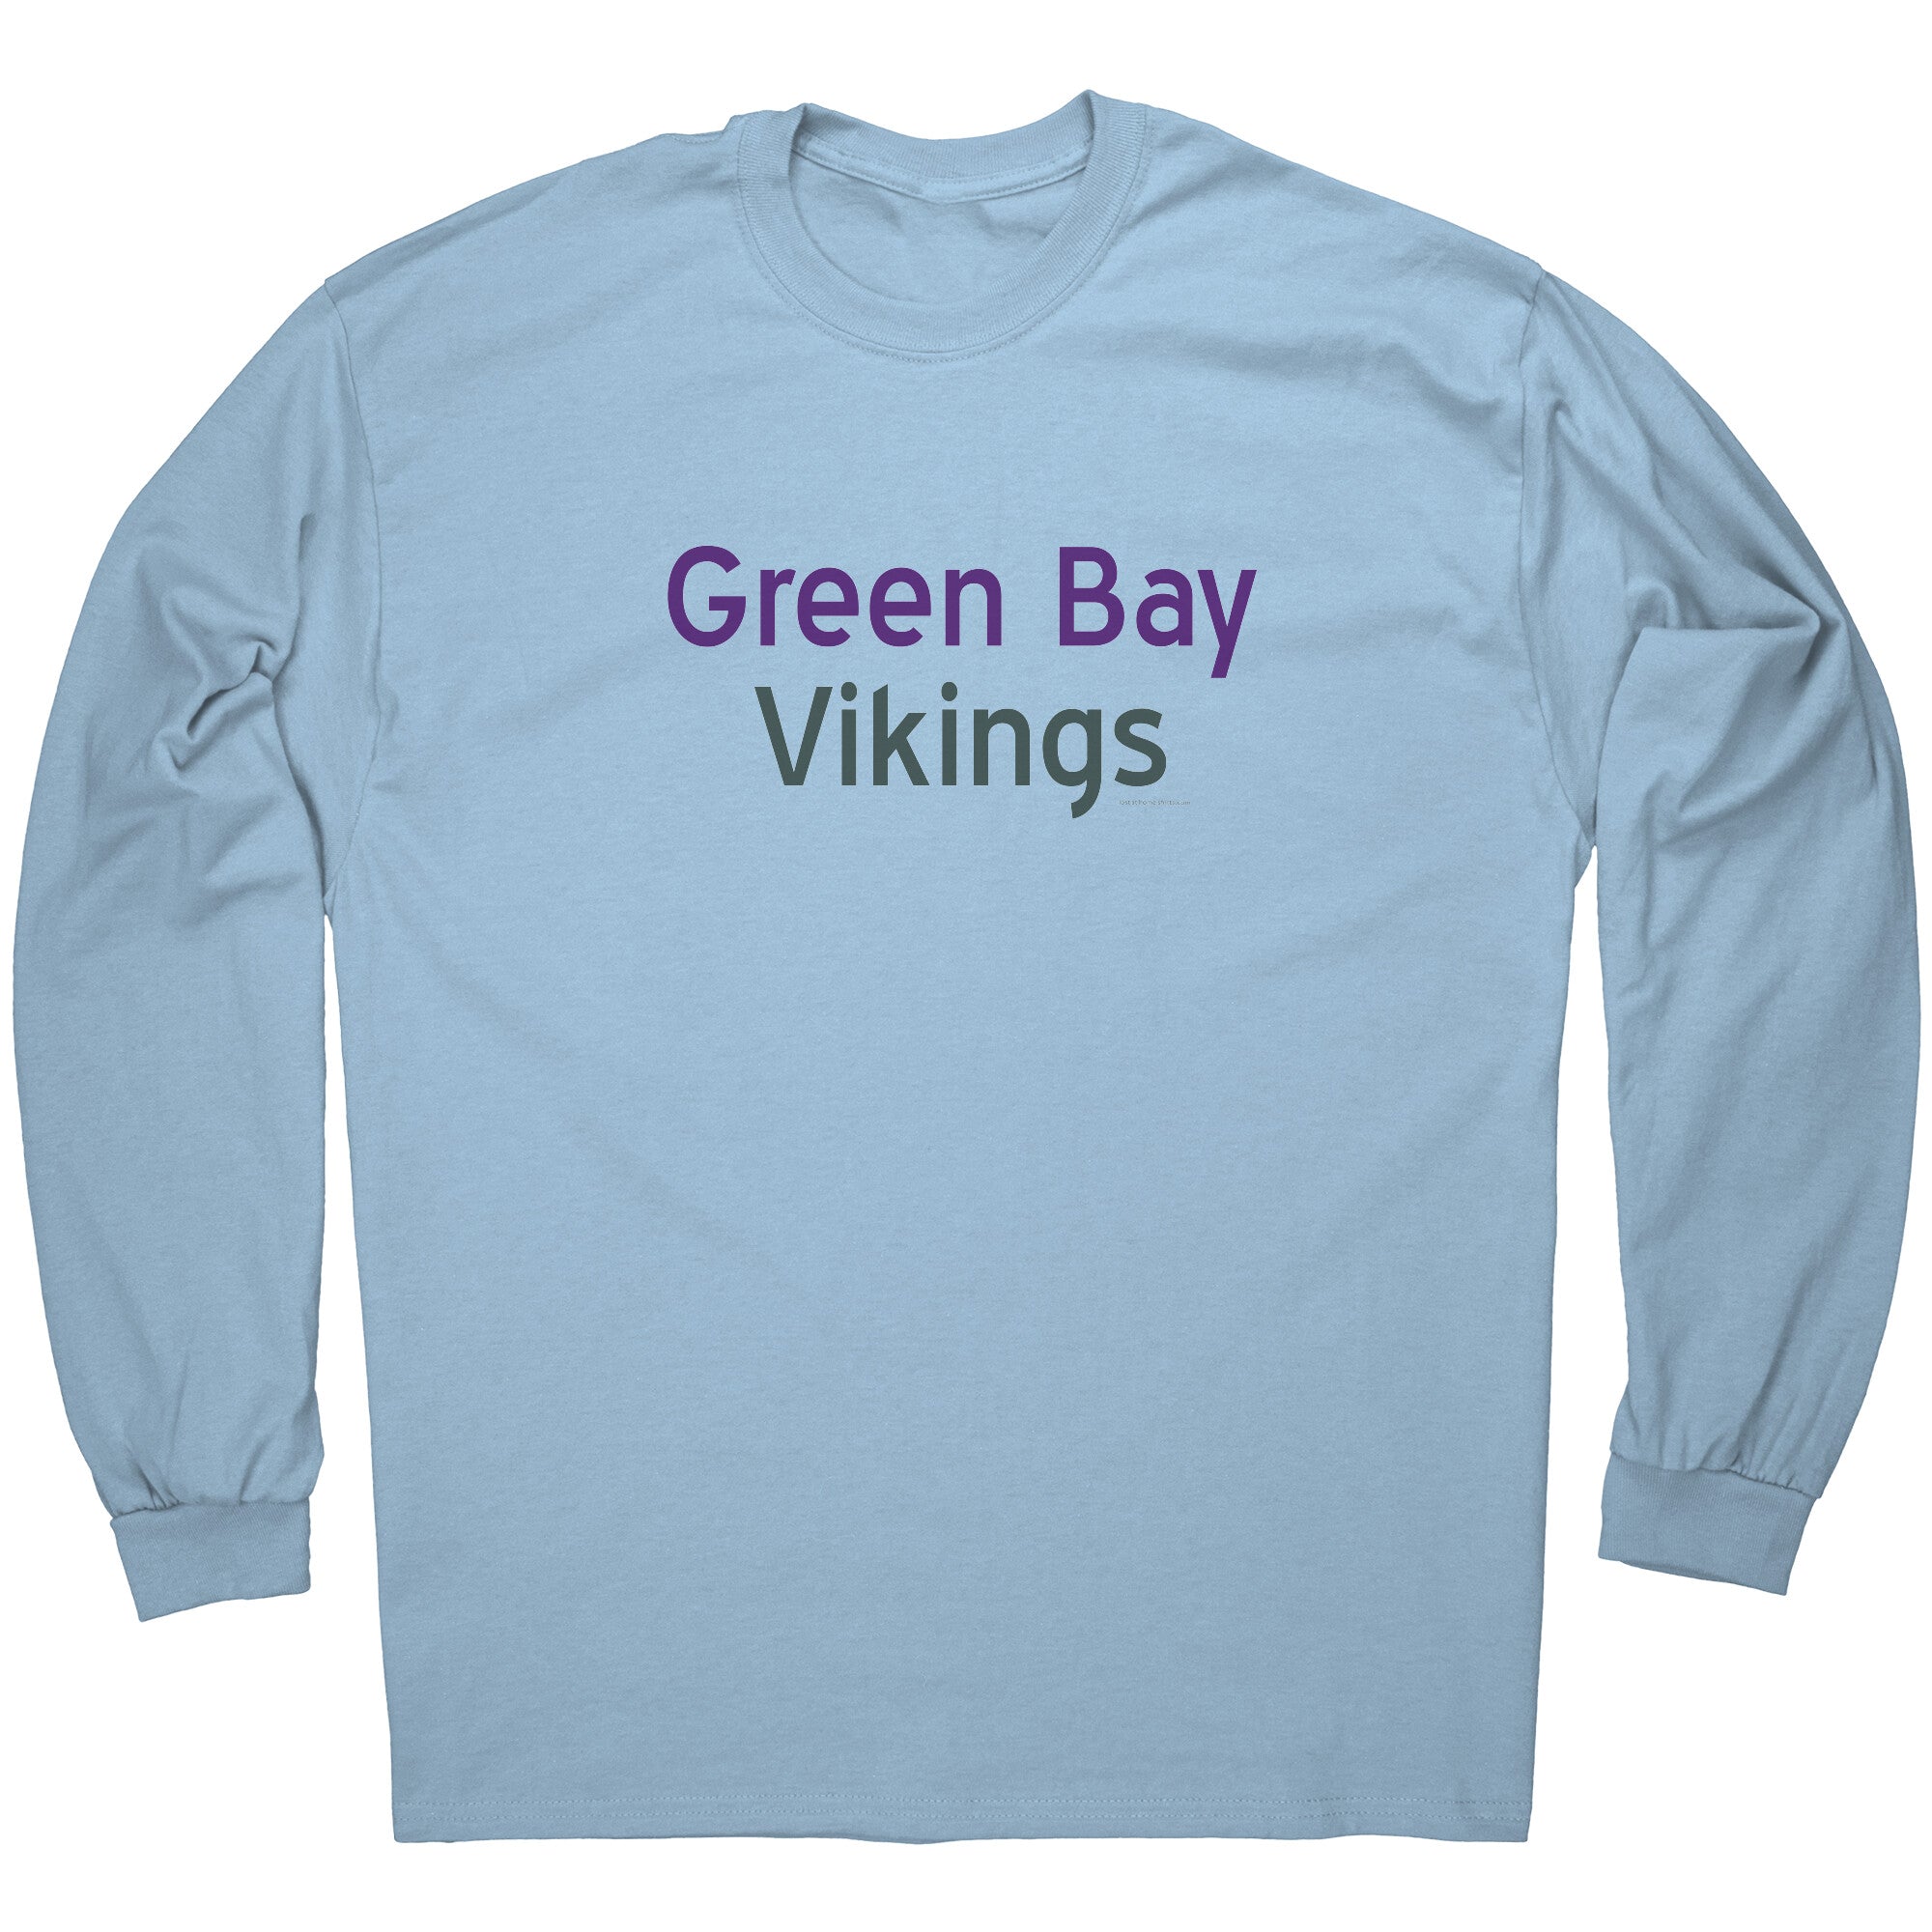 Green Bay Vikings